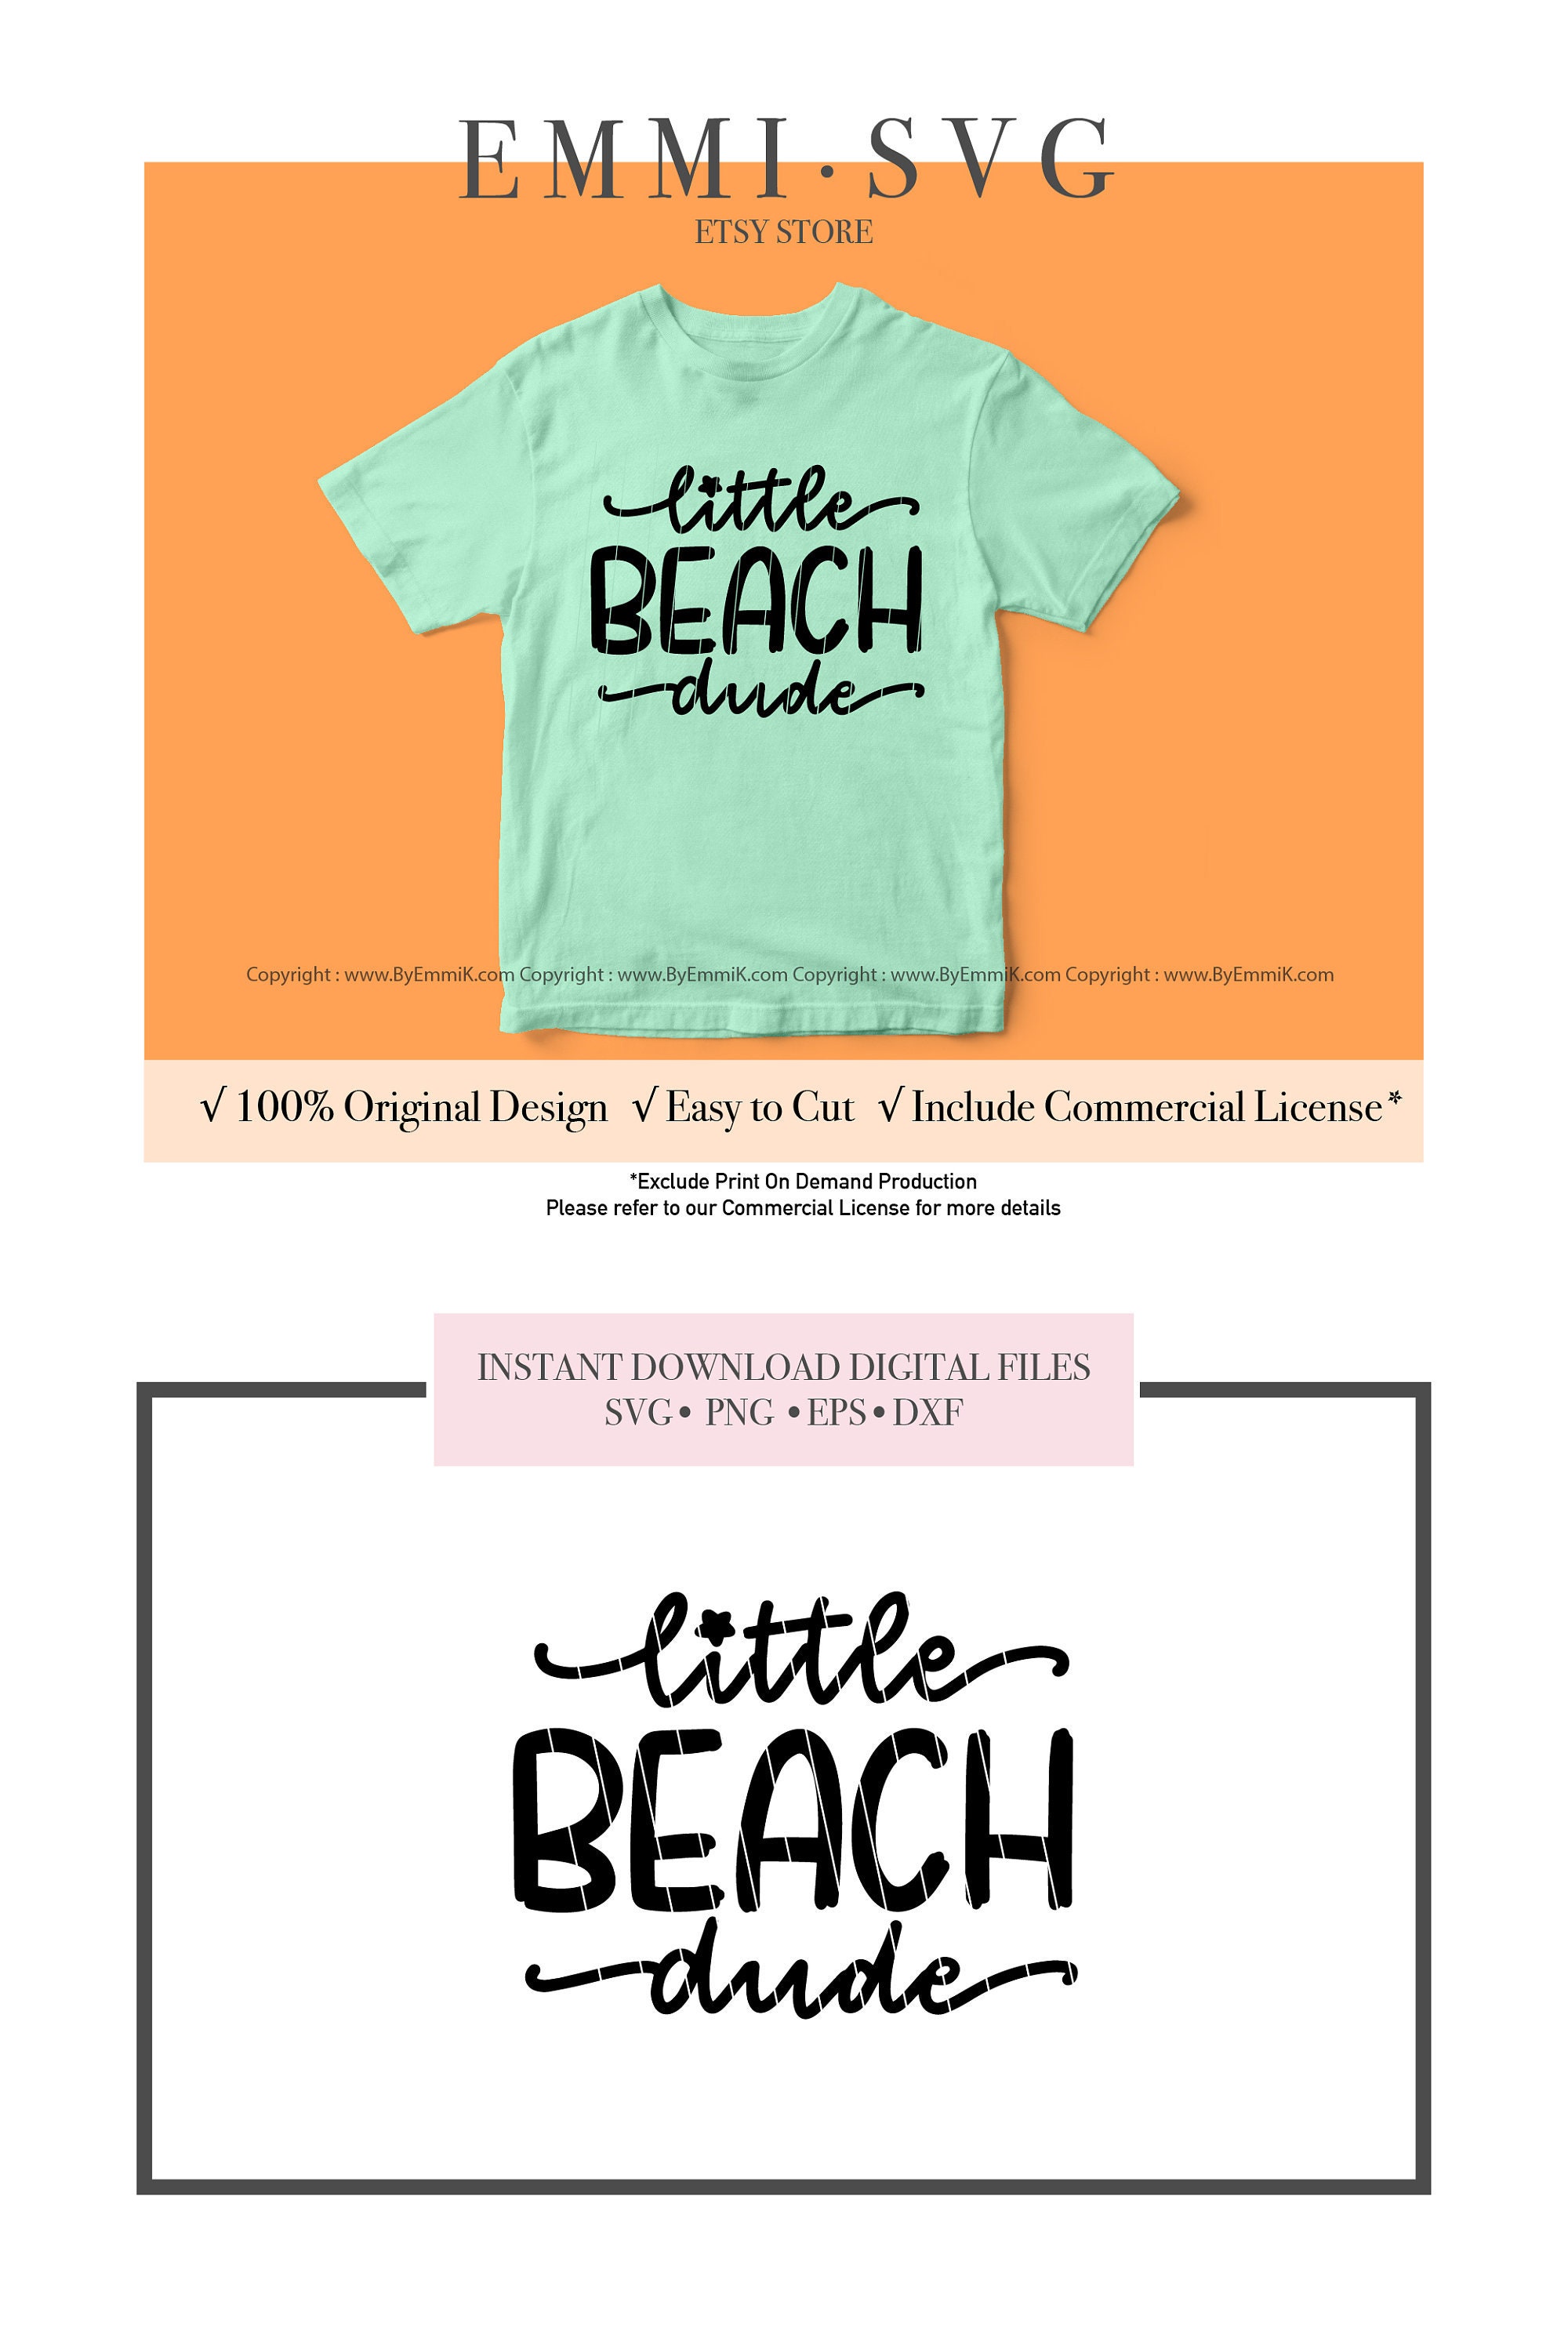 TheOliveHatch Sailboat Monogram Shirt / Boy Boat Shirt / Sailboat Shirt / Boy Beach Shirt / Summer Boy Shirt / Beach Outfit/ Boy Summer Outfit